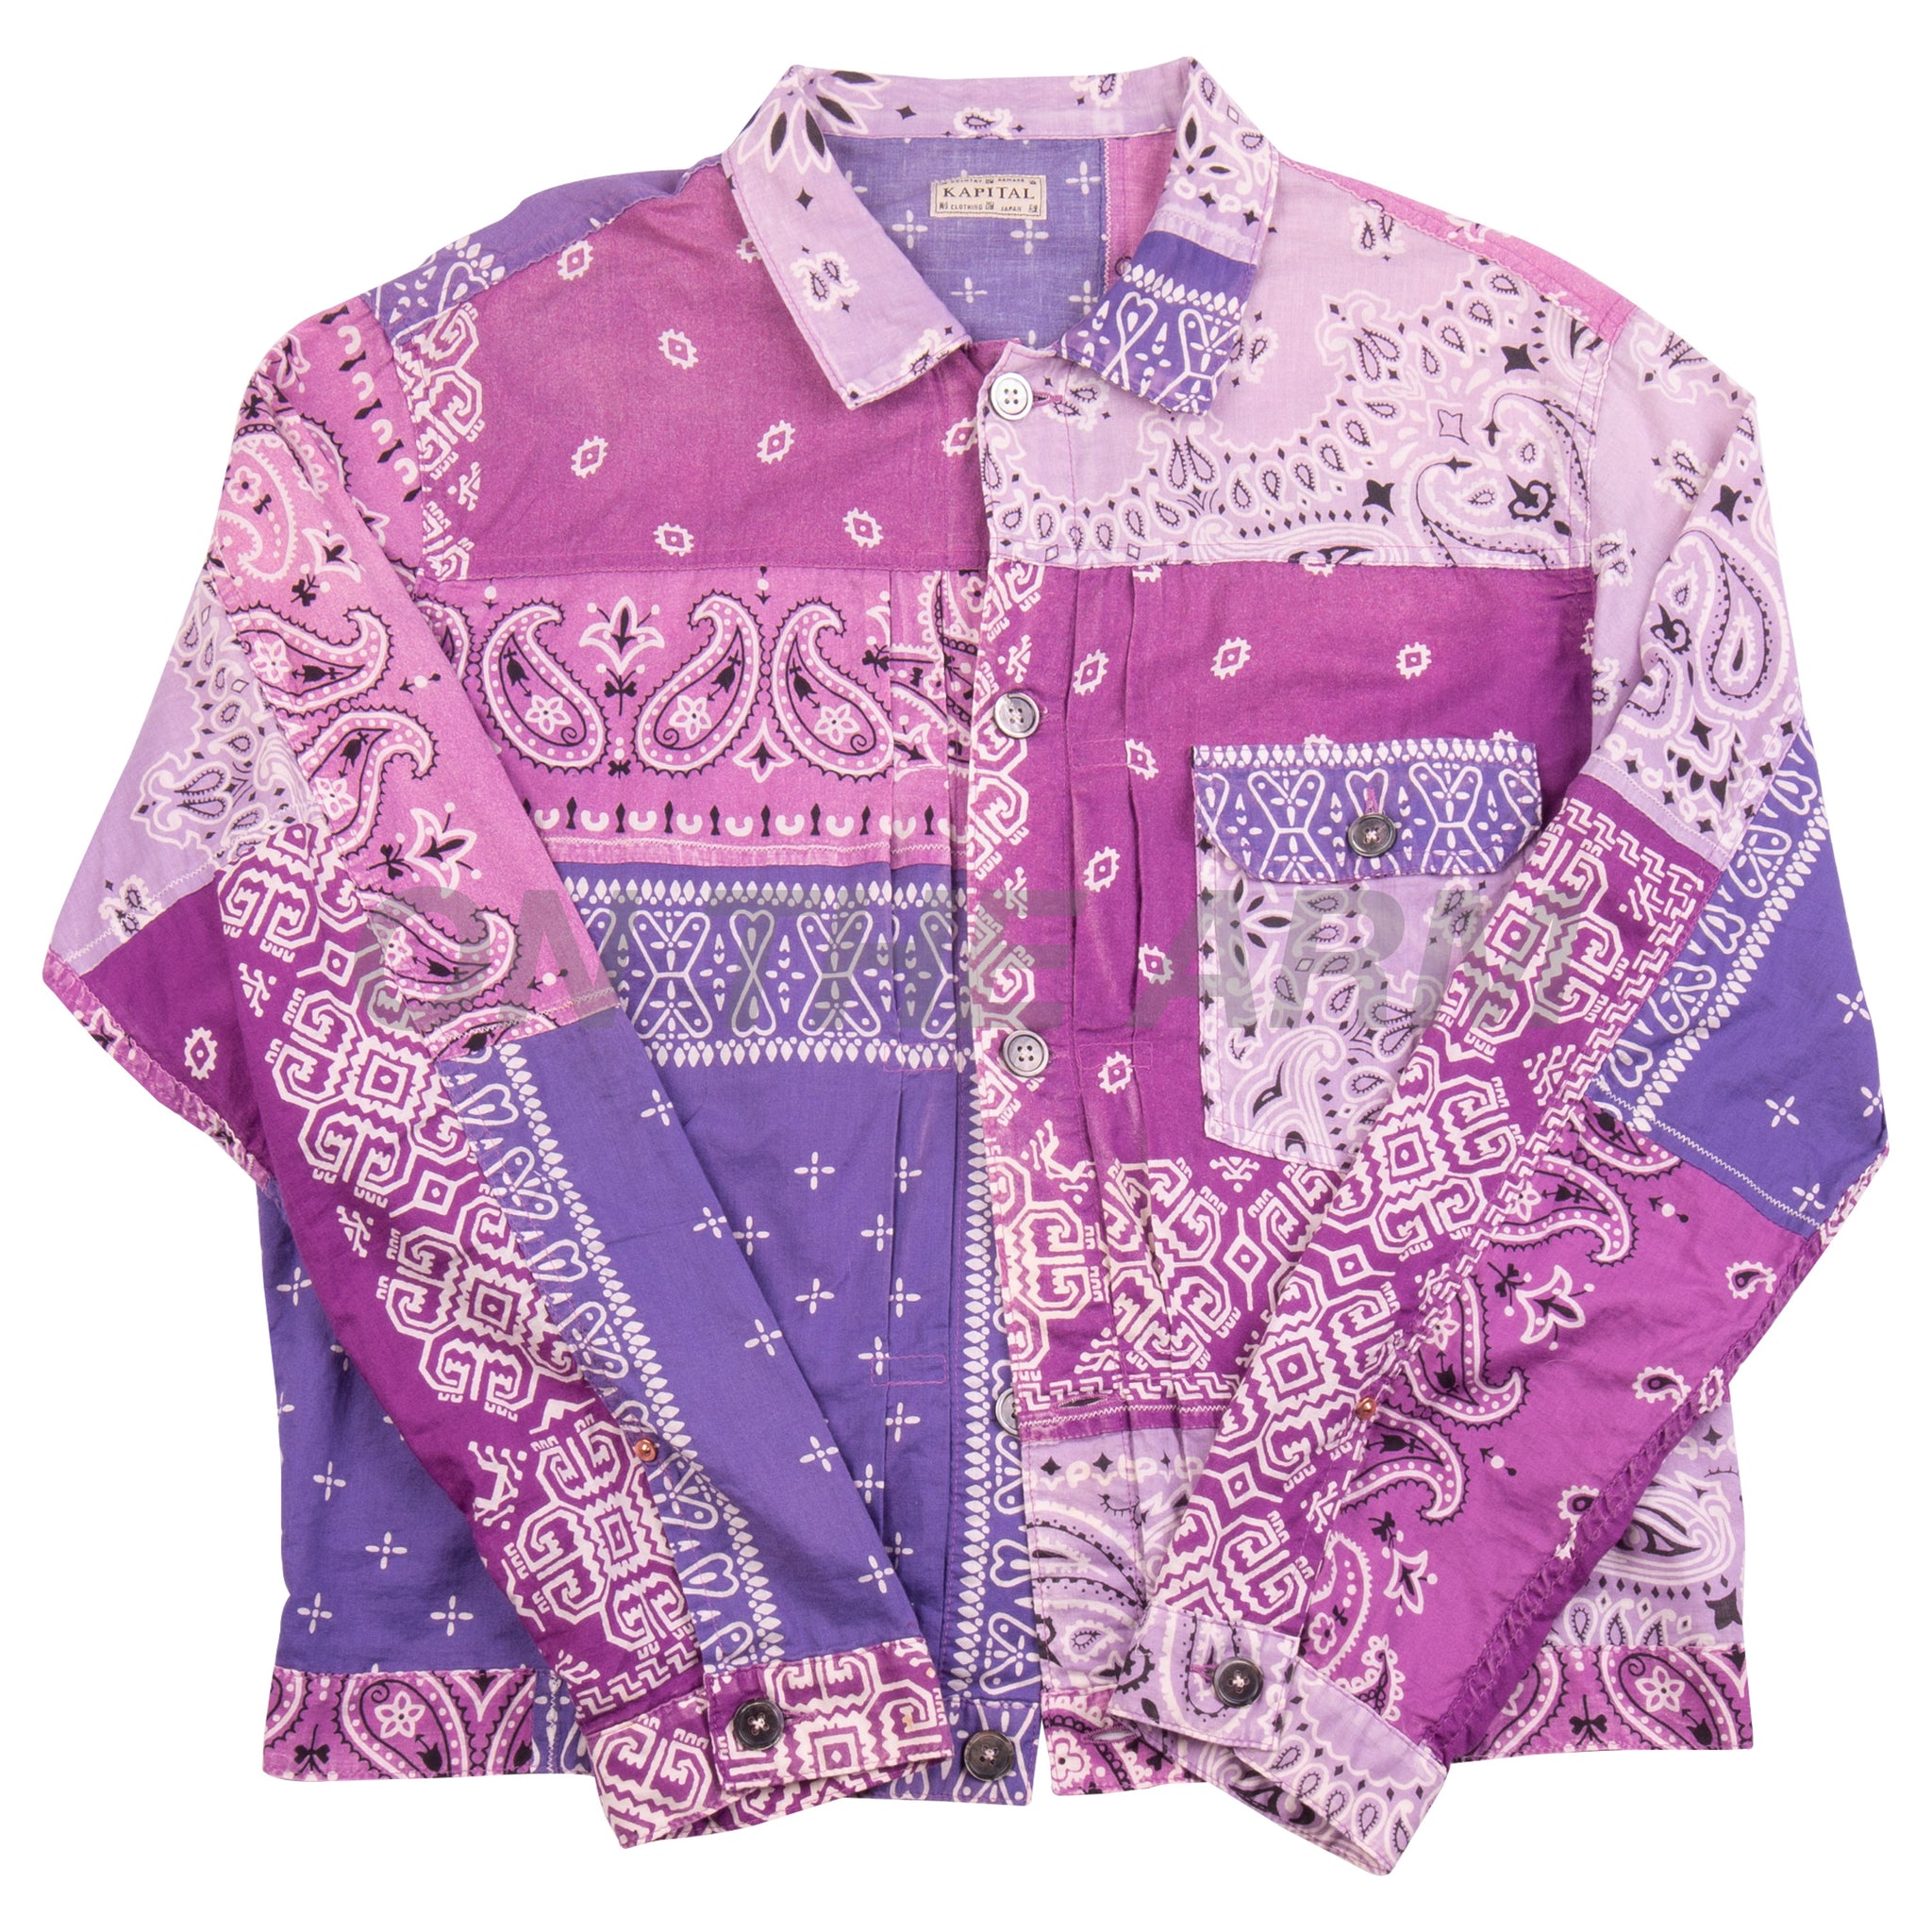 Kapital Purple Bandana Shirt USED